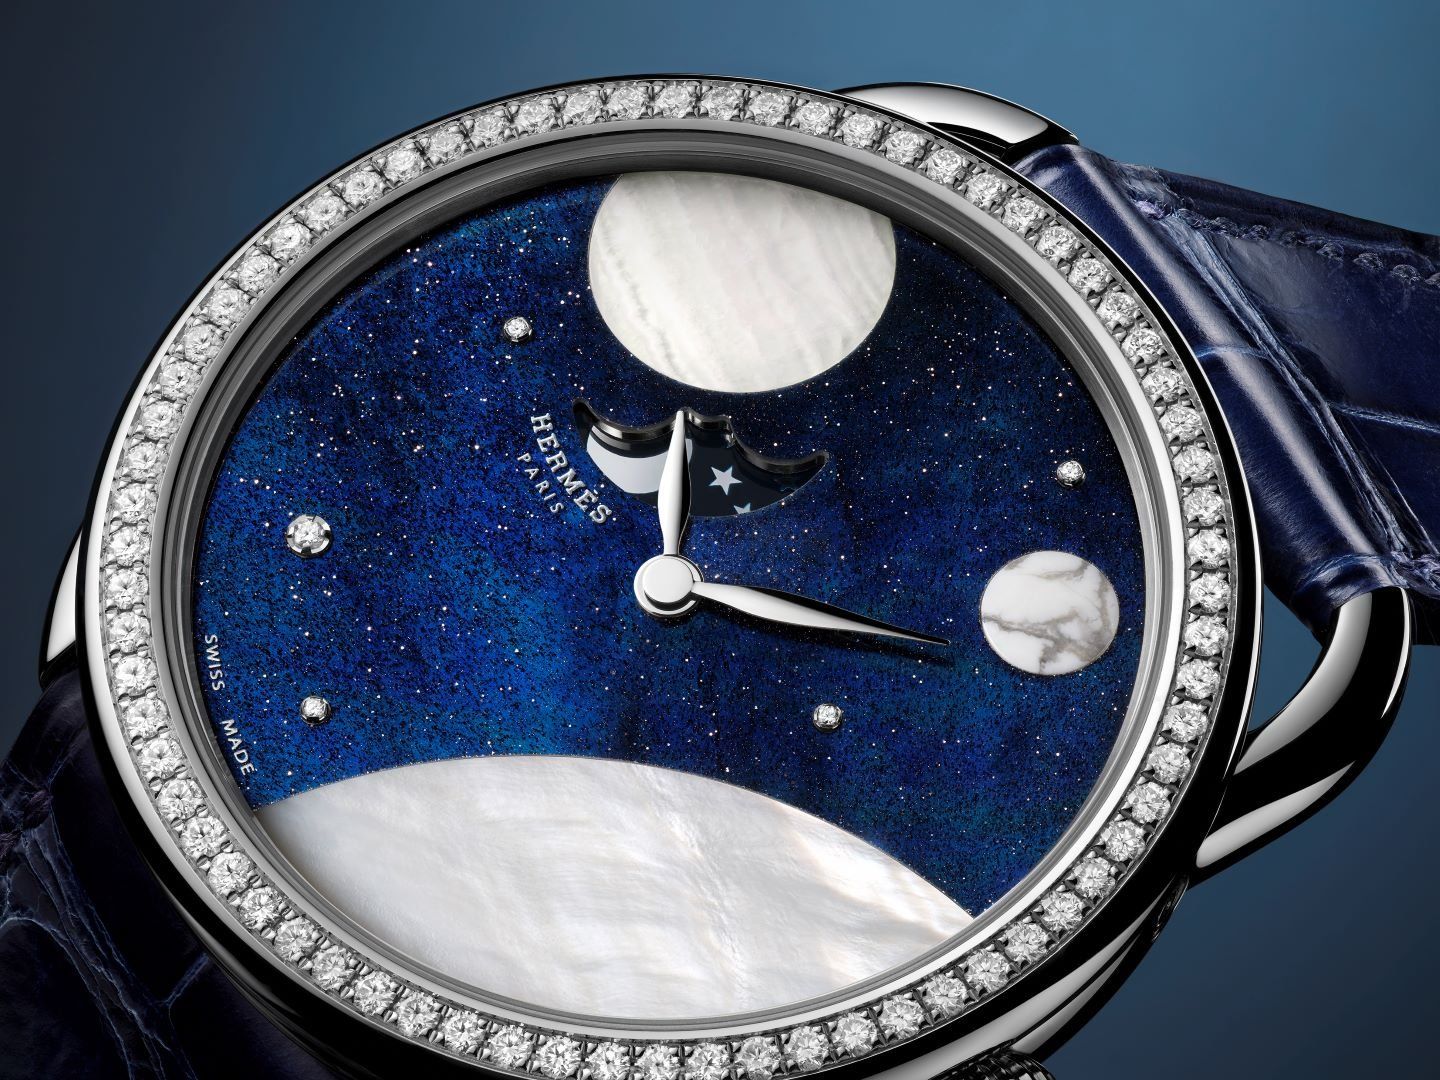 The Arceau Petite Lune showcases a fantastic cosmic interplay